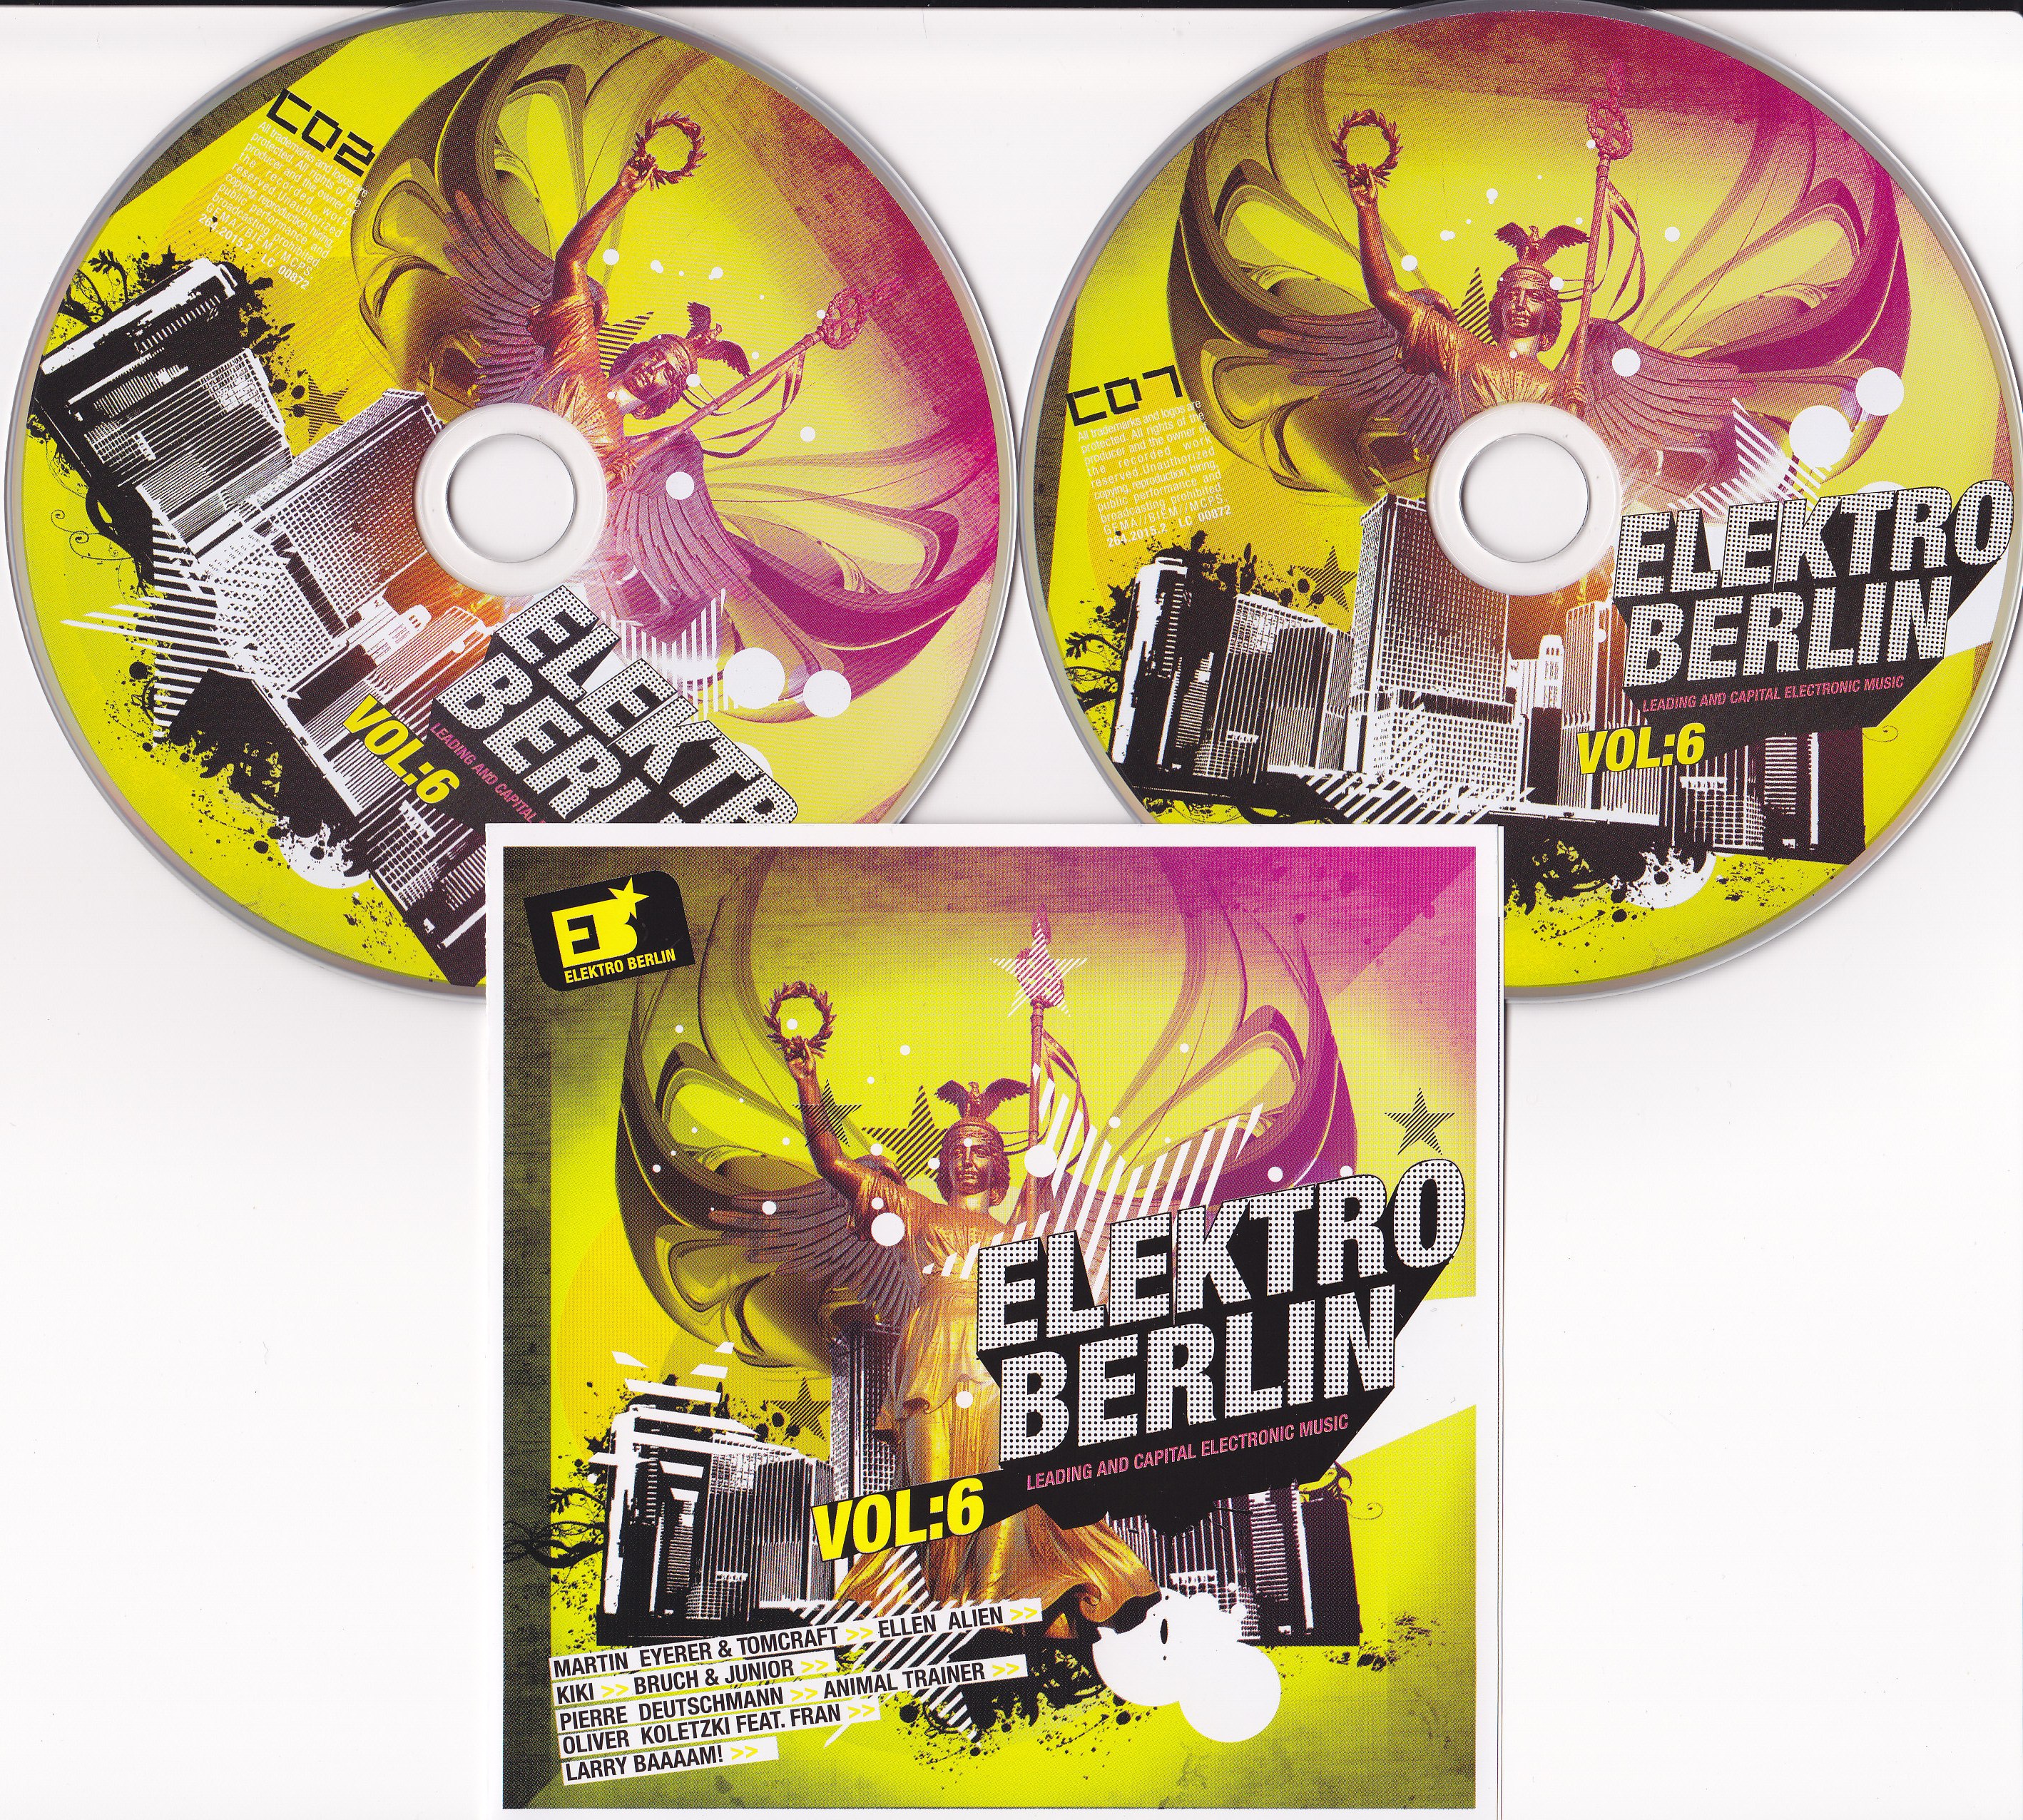 VA-Elektro Berlin Vol.6-2CD-2011 - 000-va-elektro_berlin_vol.6-2cd-2011-covers-mst.jpg